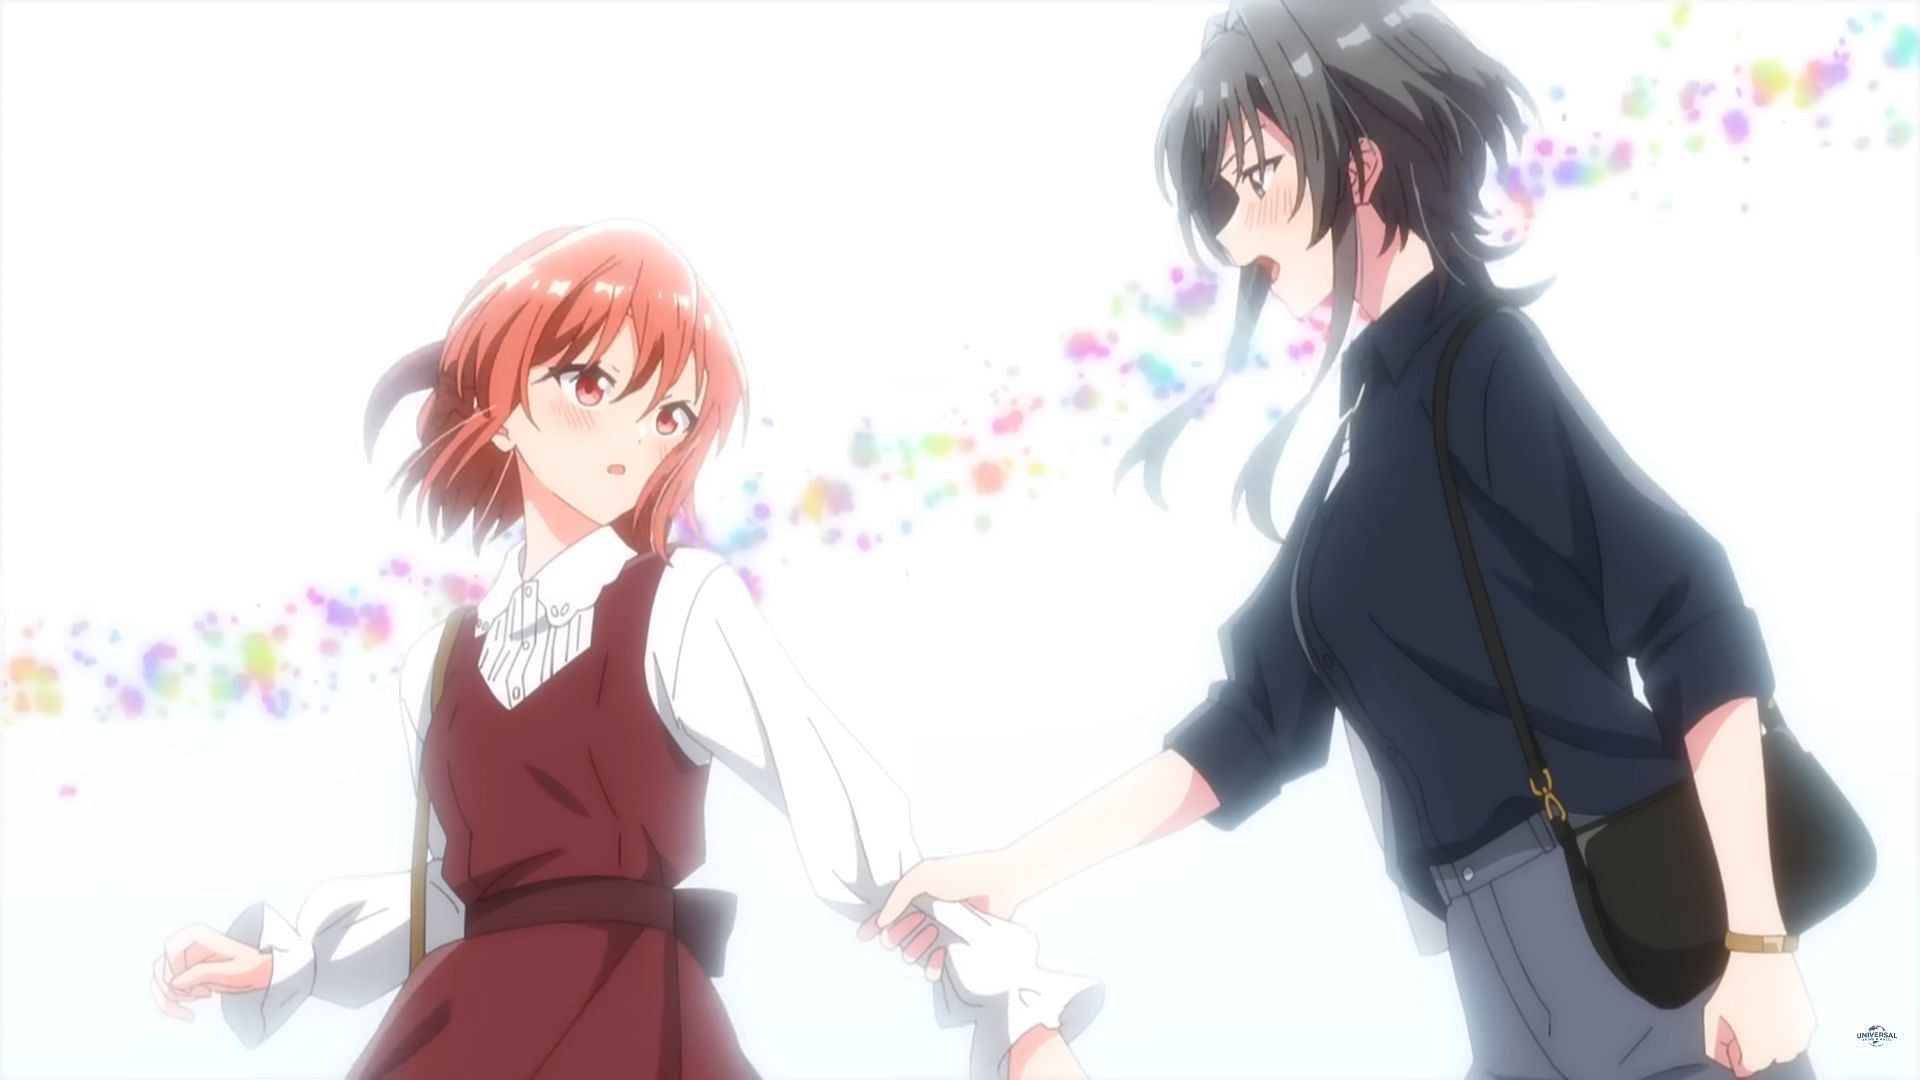 Himari and Yori, as seen in the official trailer (Image via Yokohama Animation Studio/Cloud Hearts)